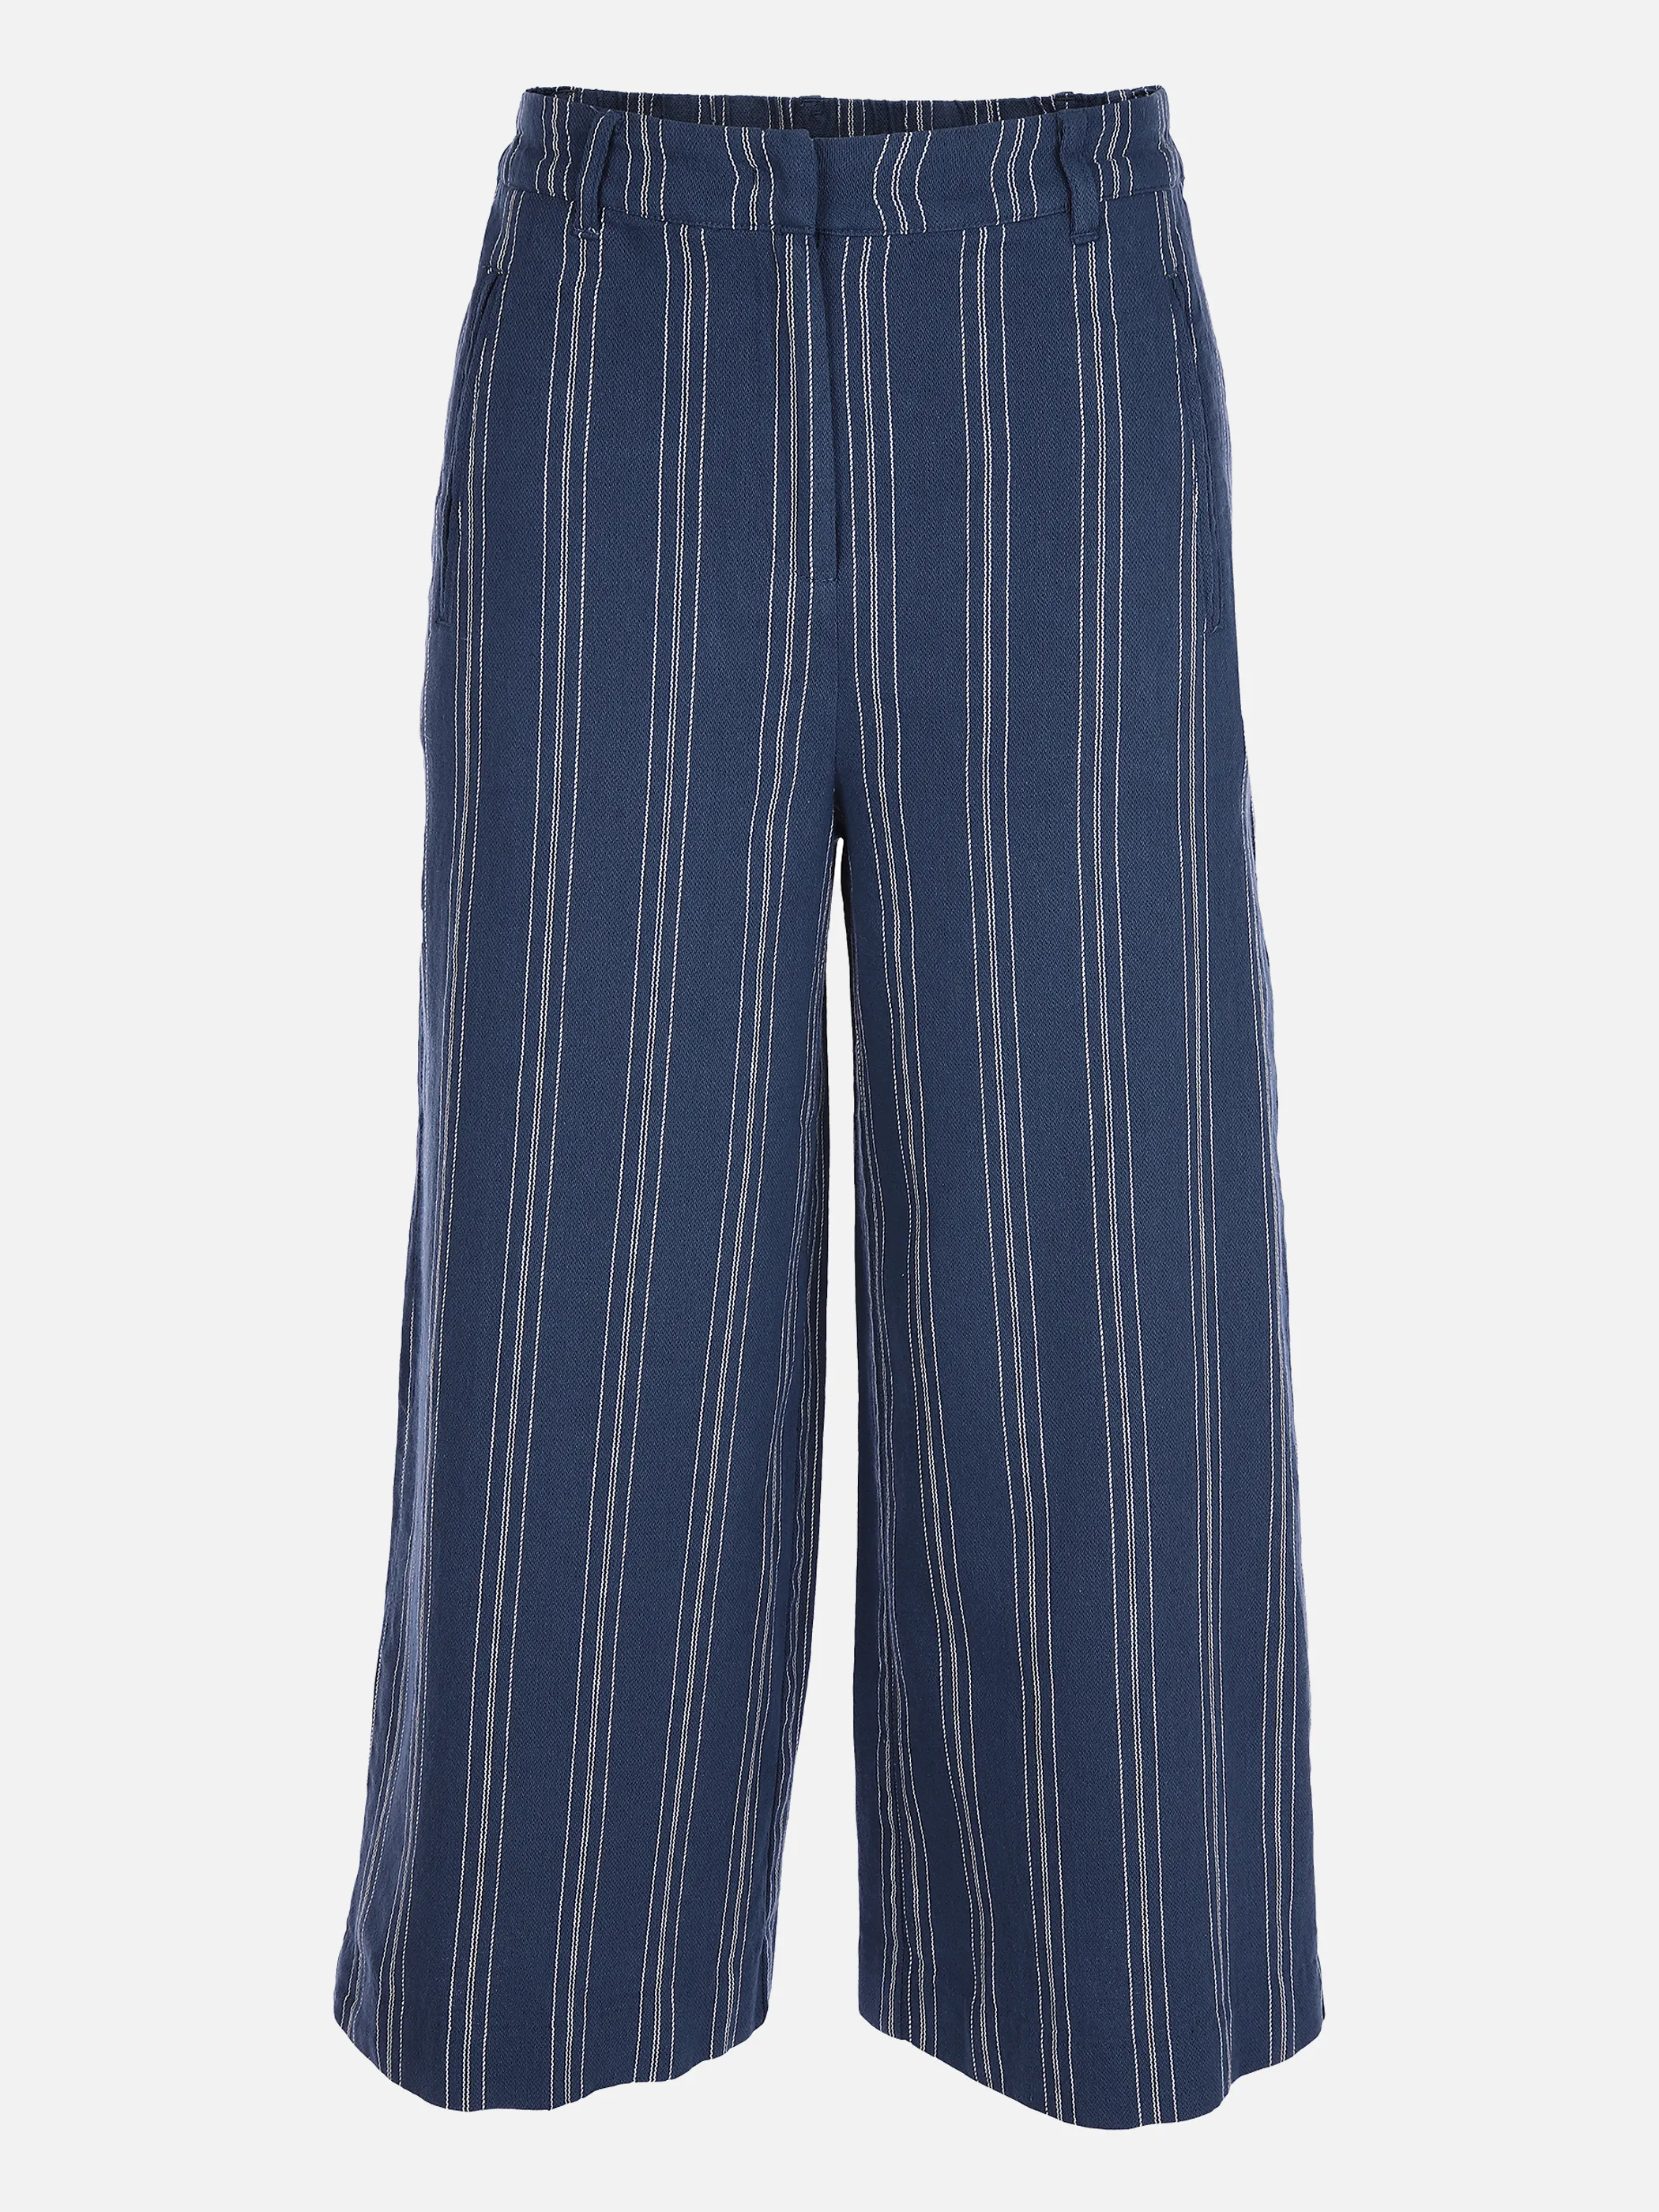 Tom Tailor 1031280 pants culotte striped Blau 865225 29534 1